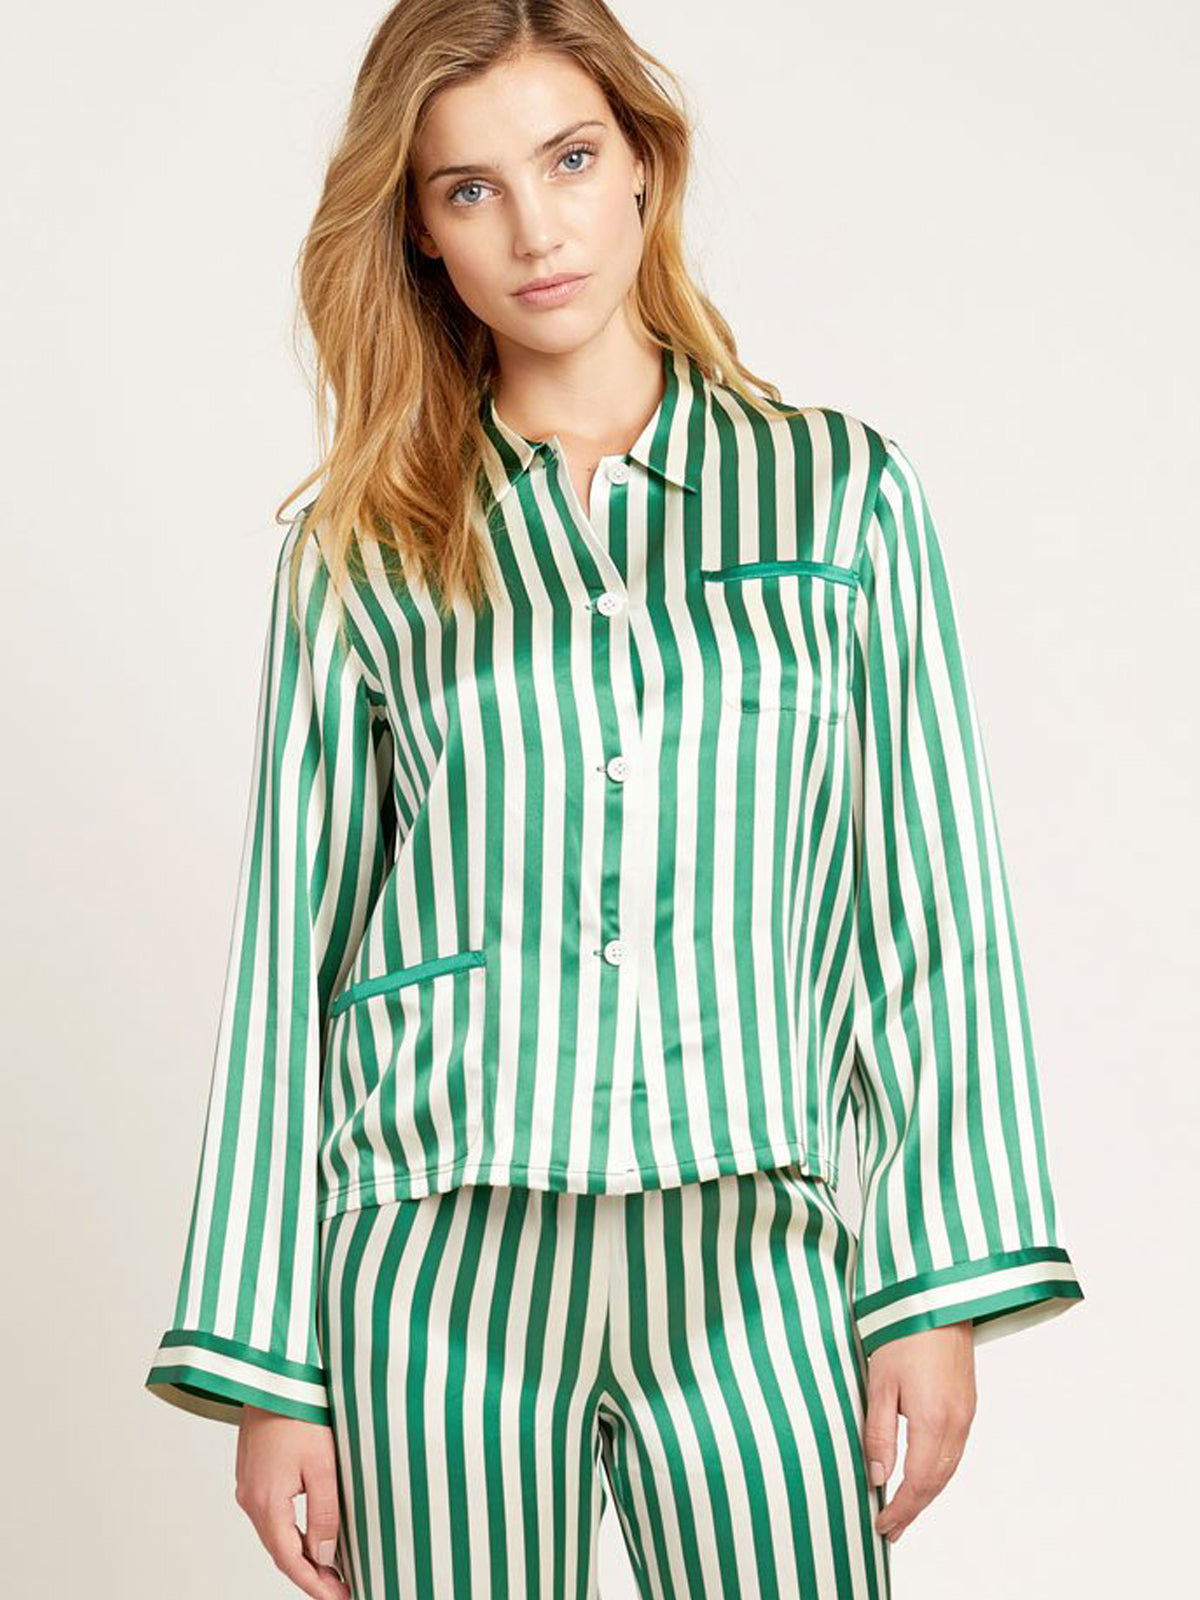 Ruthie Top in Emerald  Ready-to-Wear Designer Silk Pajama Top